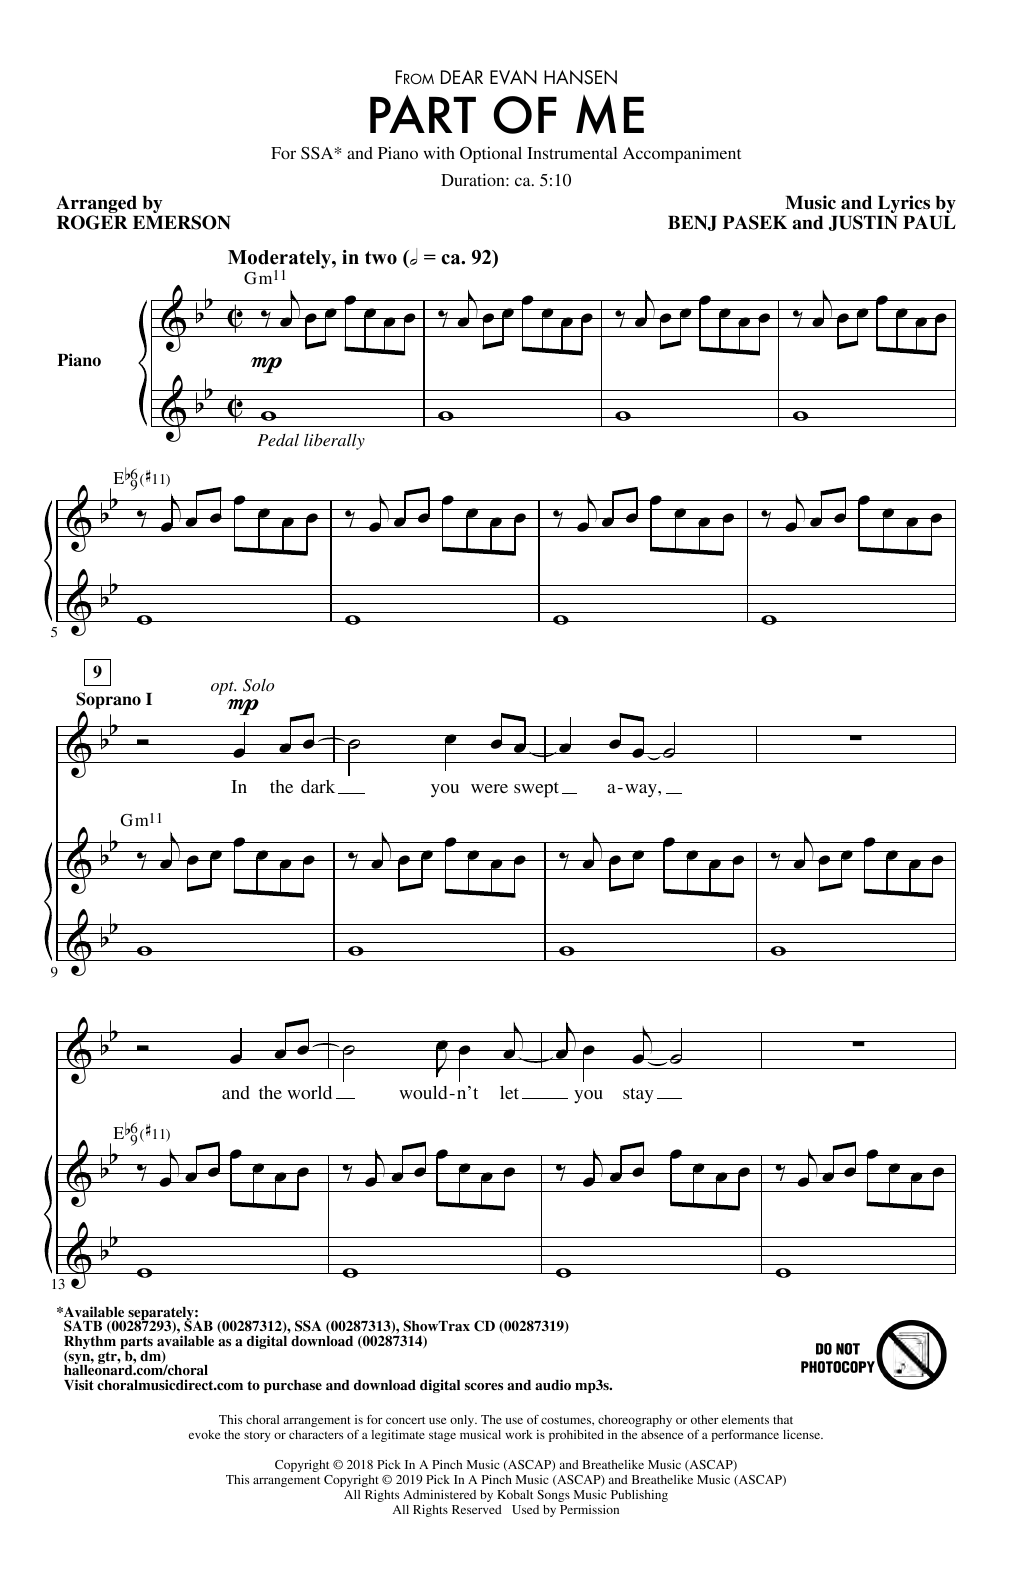 Pasek & Paul Part Of Me (from Dear Evan Hansen) (arr. Roger Emerson) Sheet Music Notes & Chords for SAB Choir - Download or Print PDF